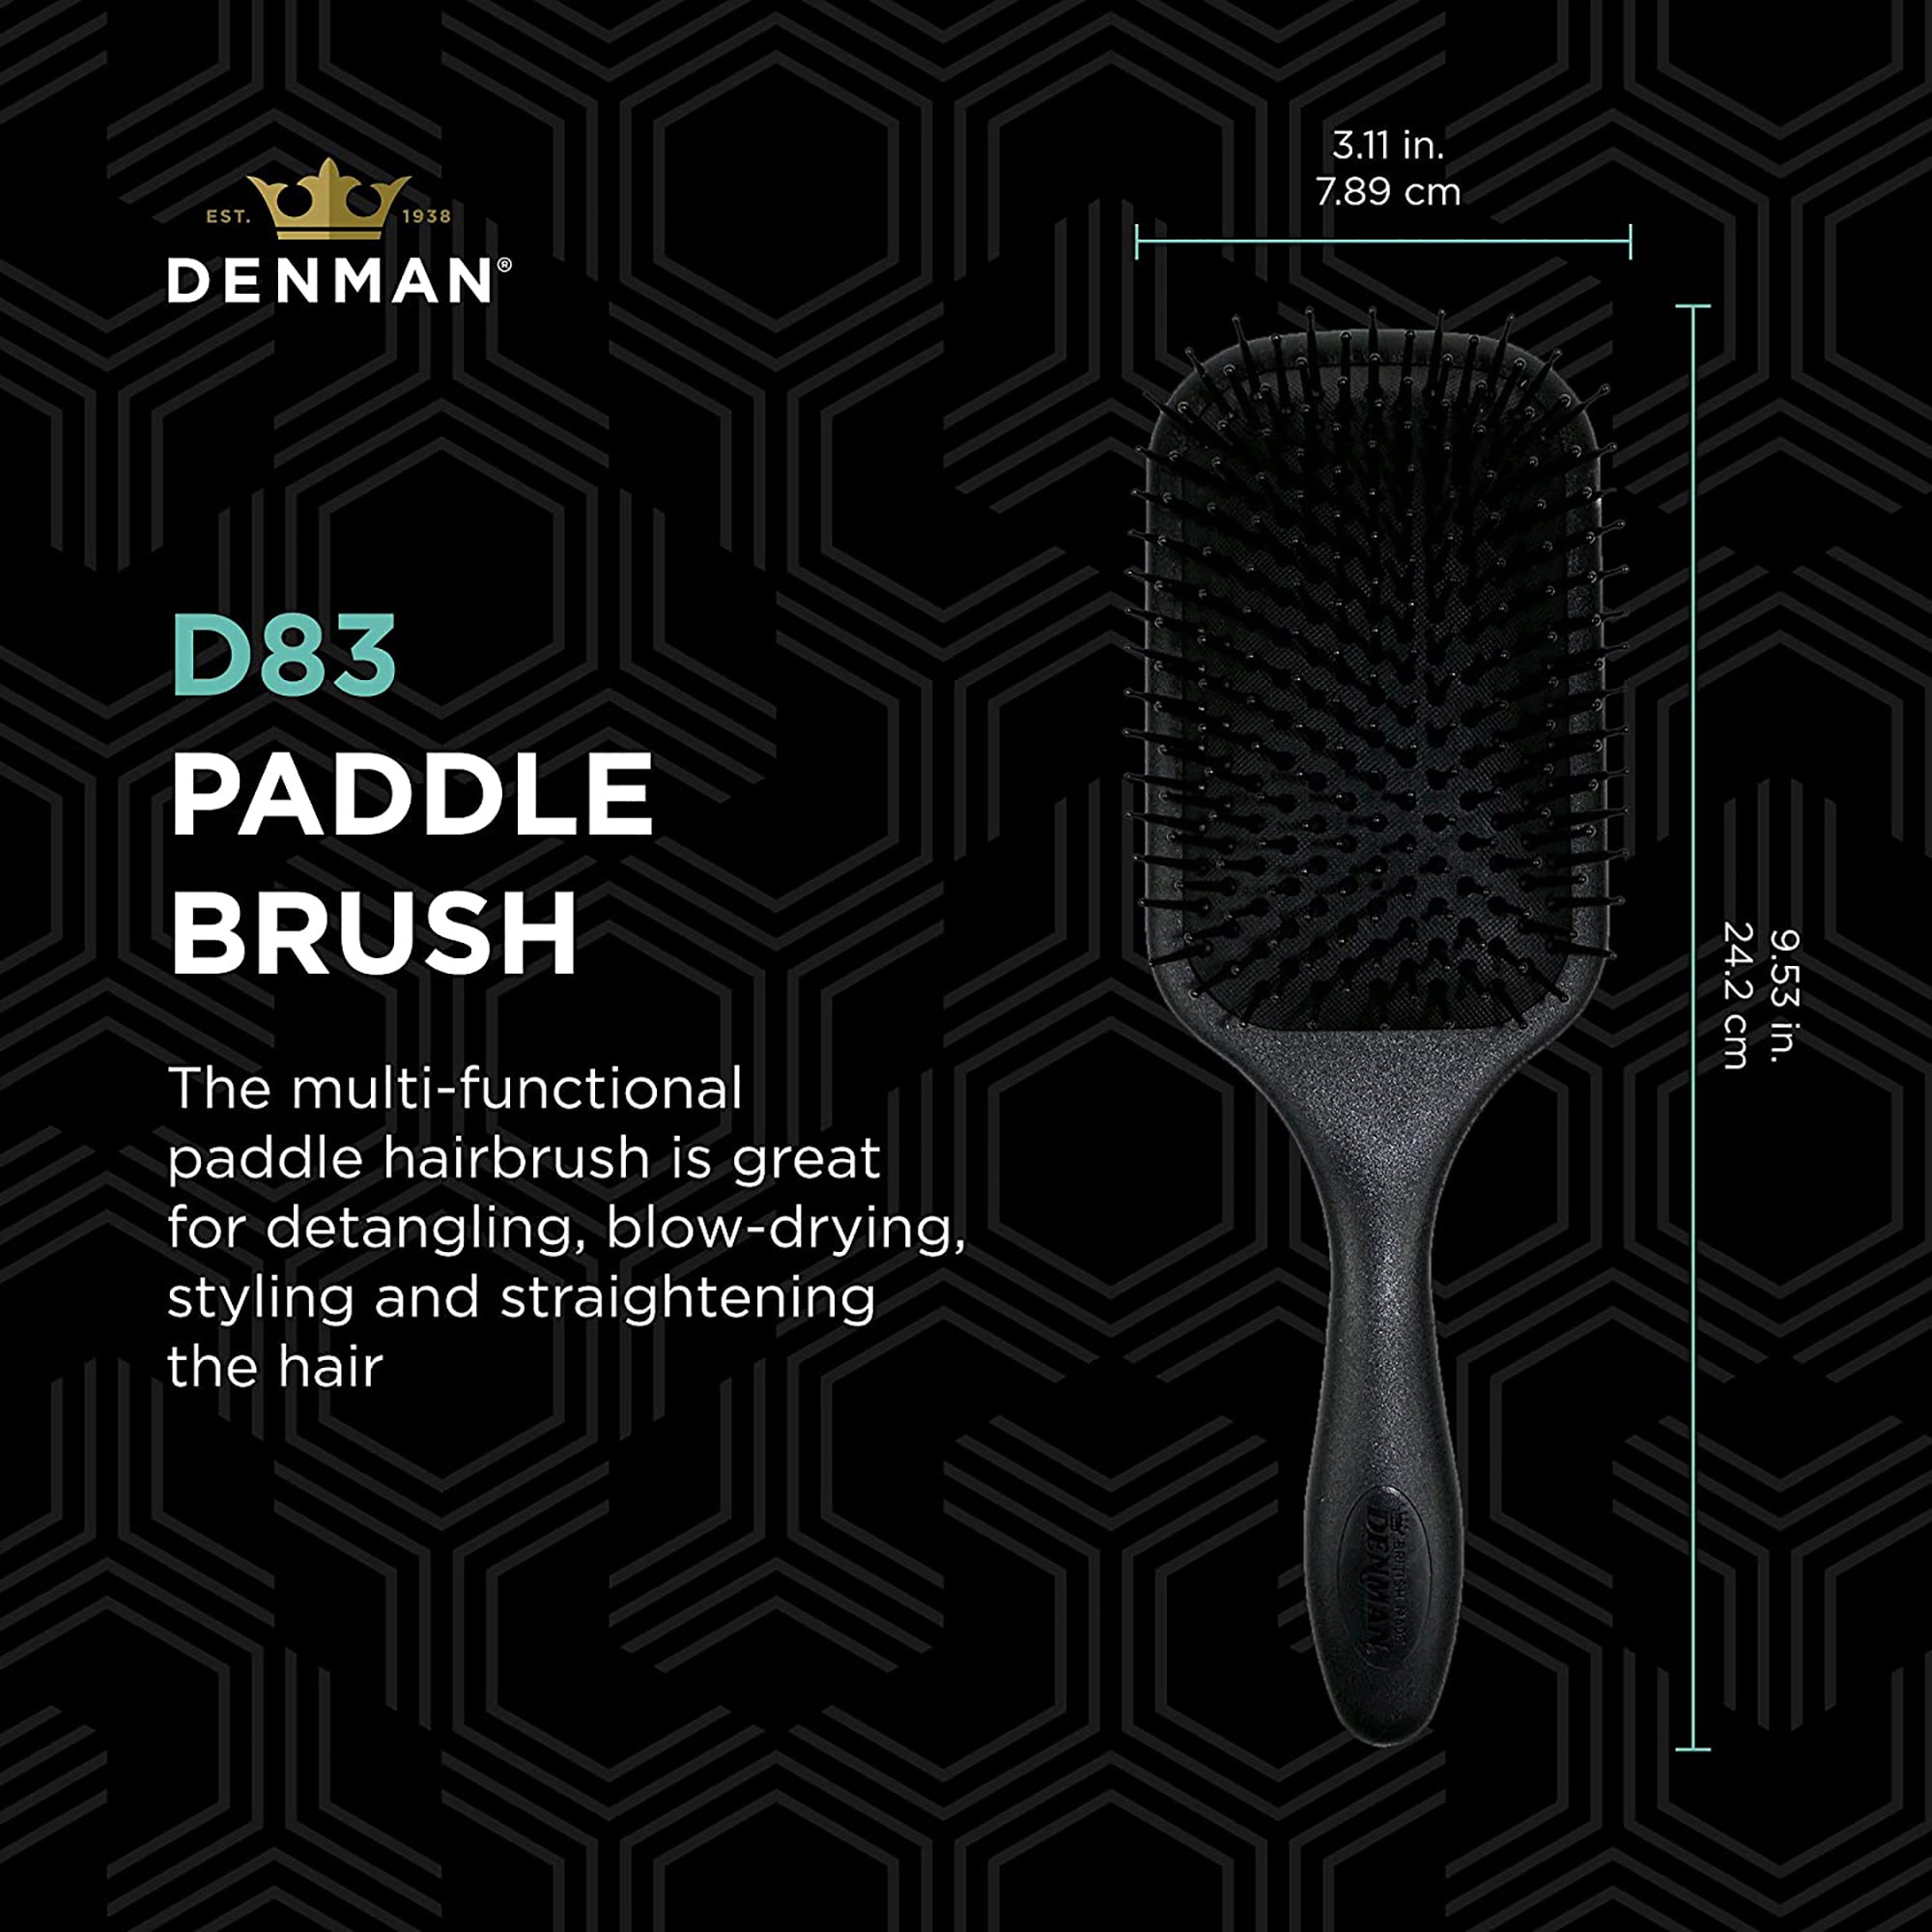 Denman D83 Large paddle brush